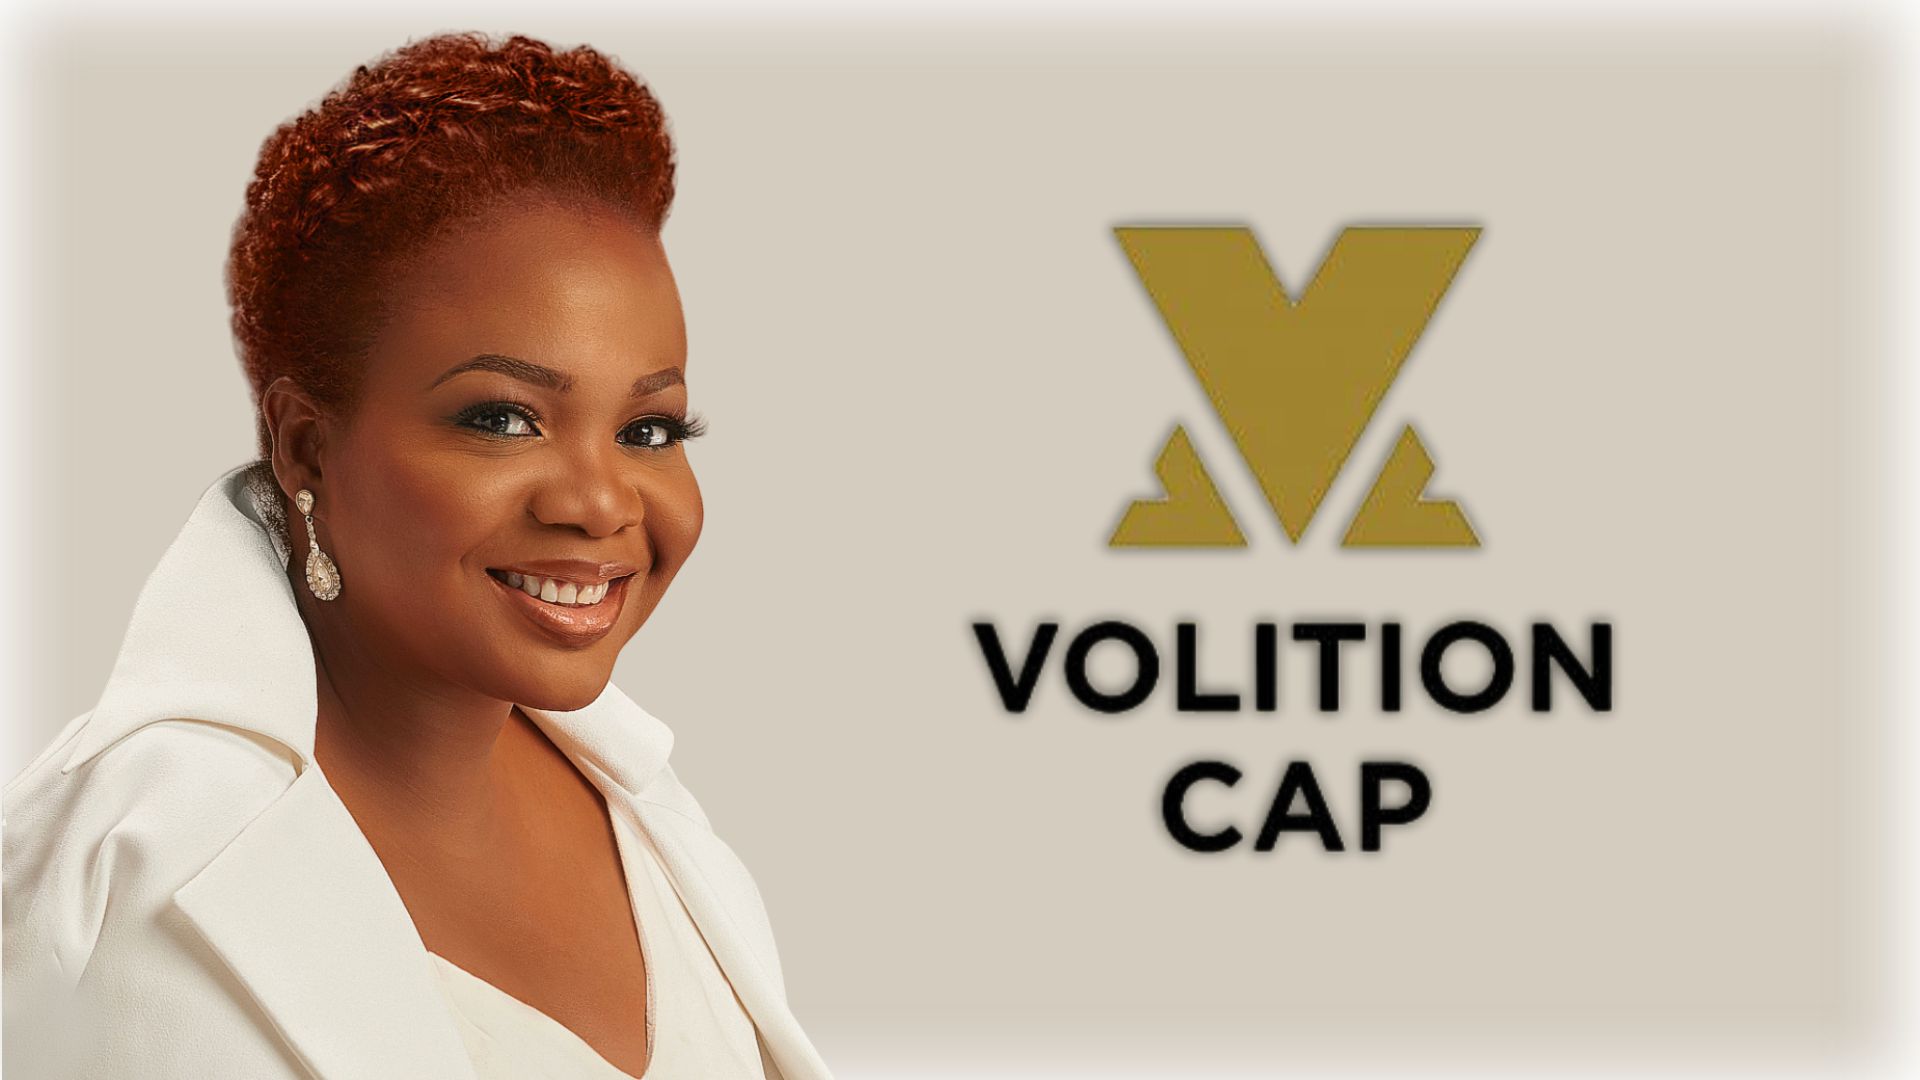 Volition Cap - Subomi Plumptre Headshot